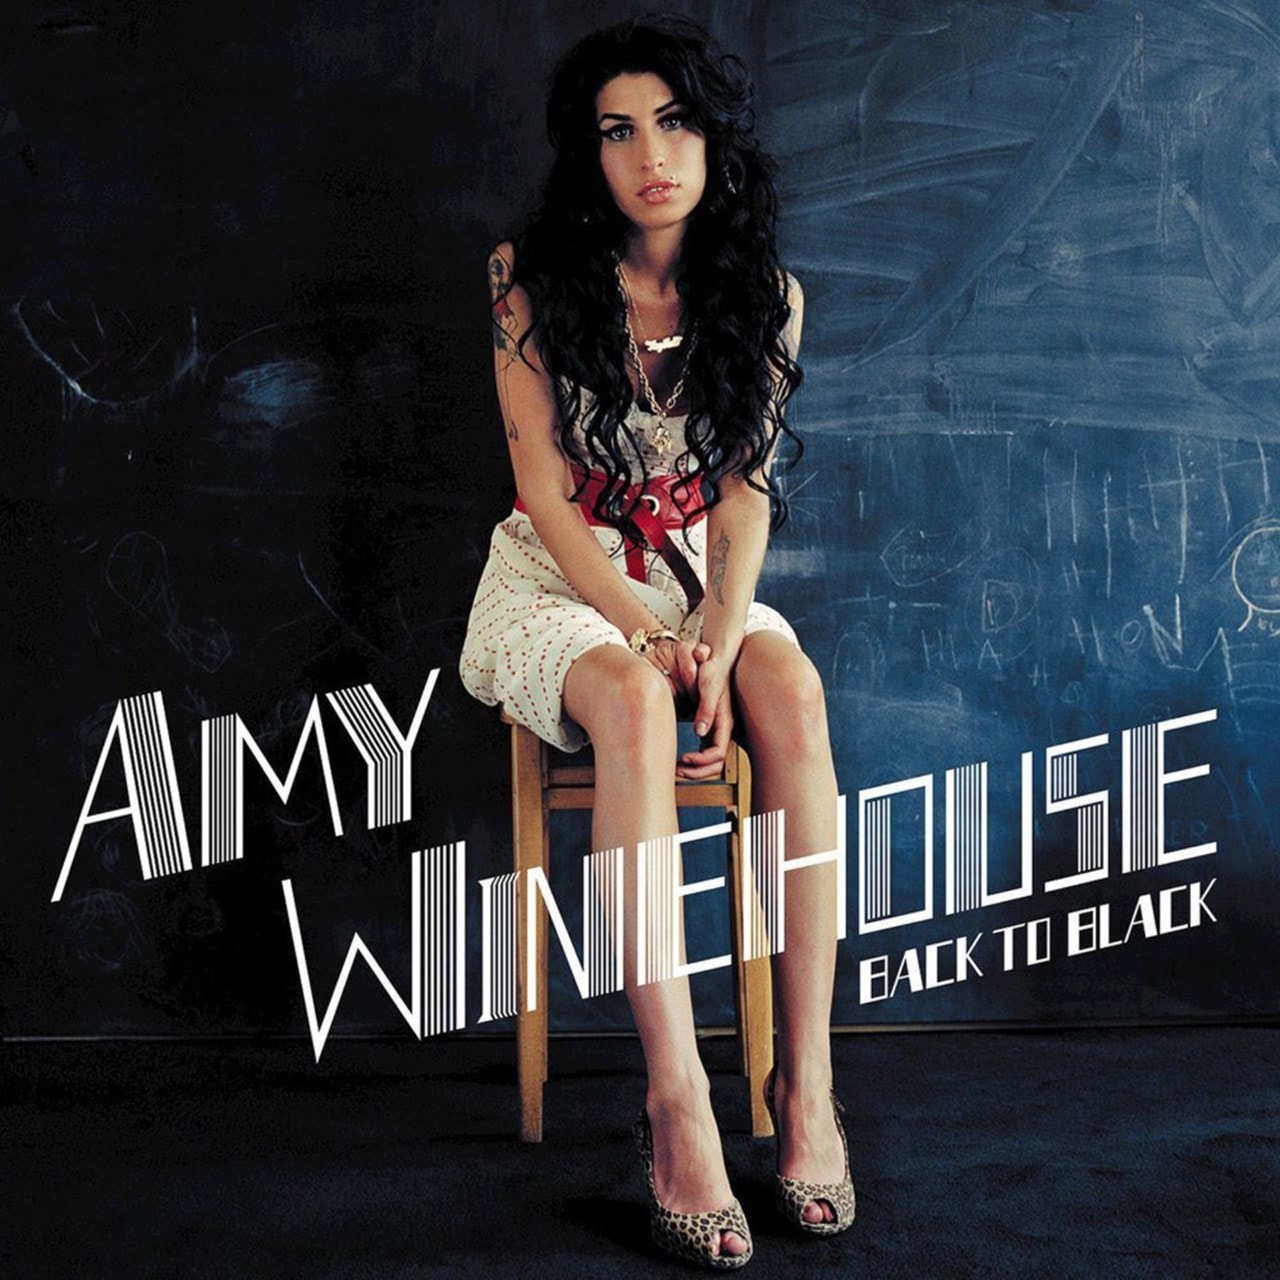 Amy Winehouse - Back To Black (Half Speed Master)